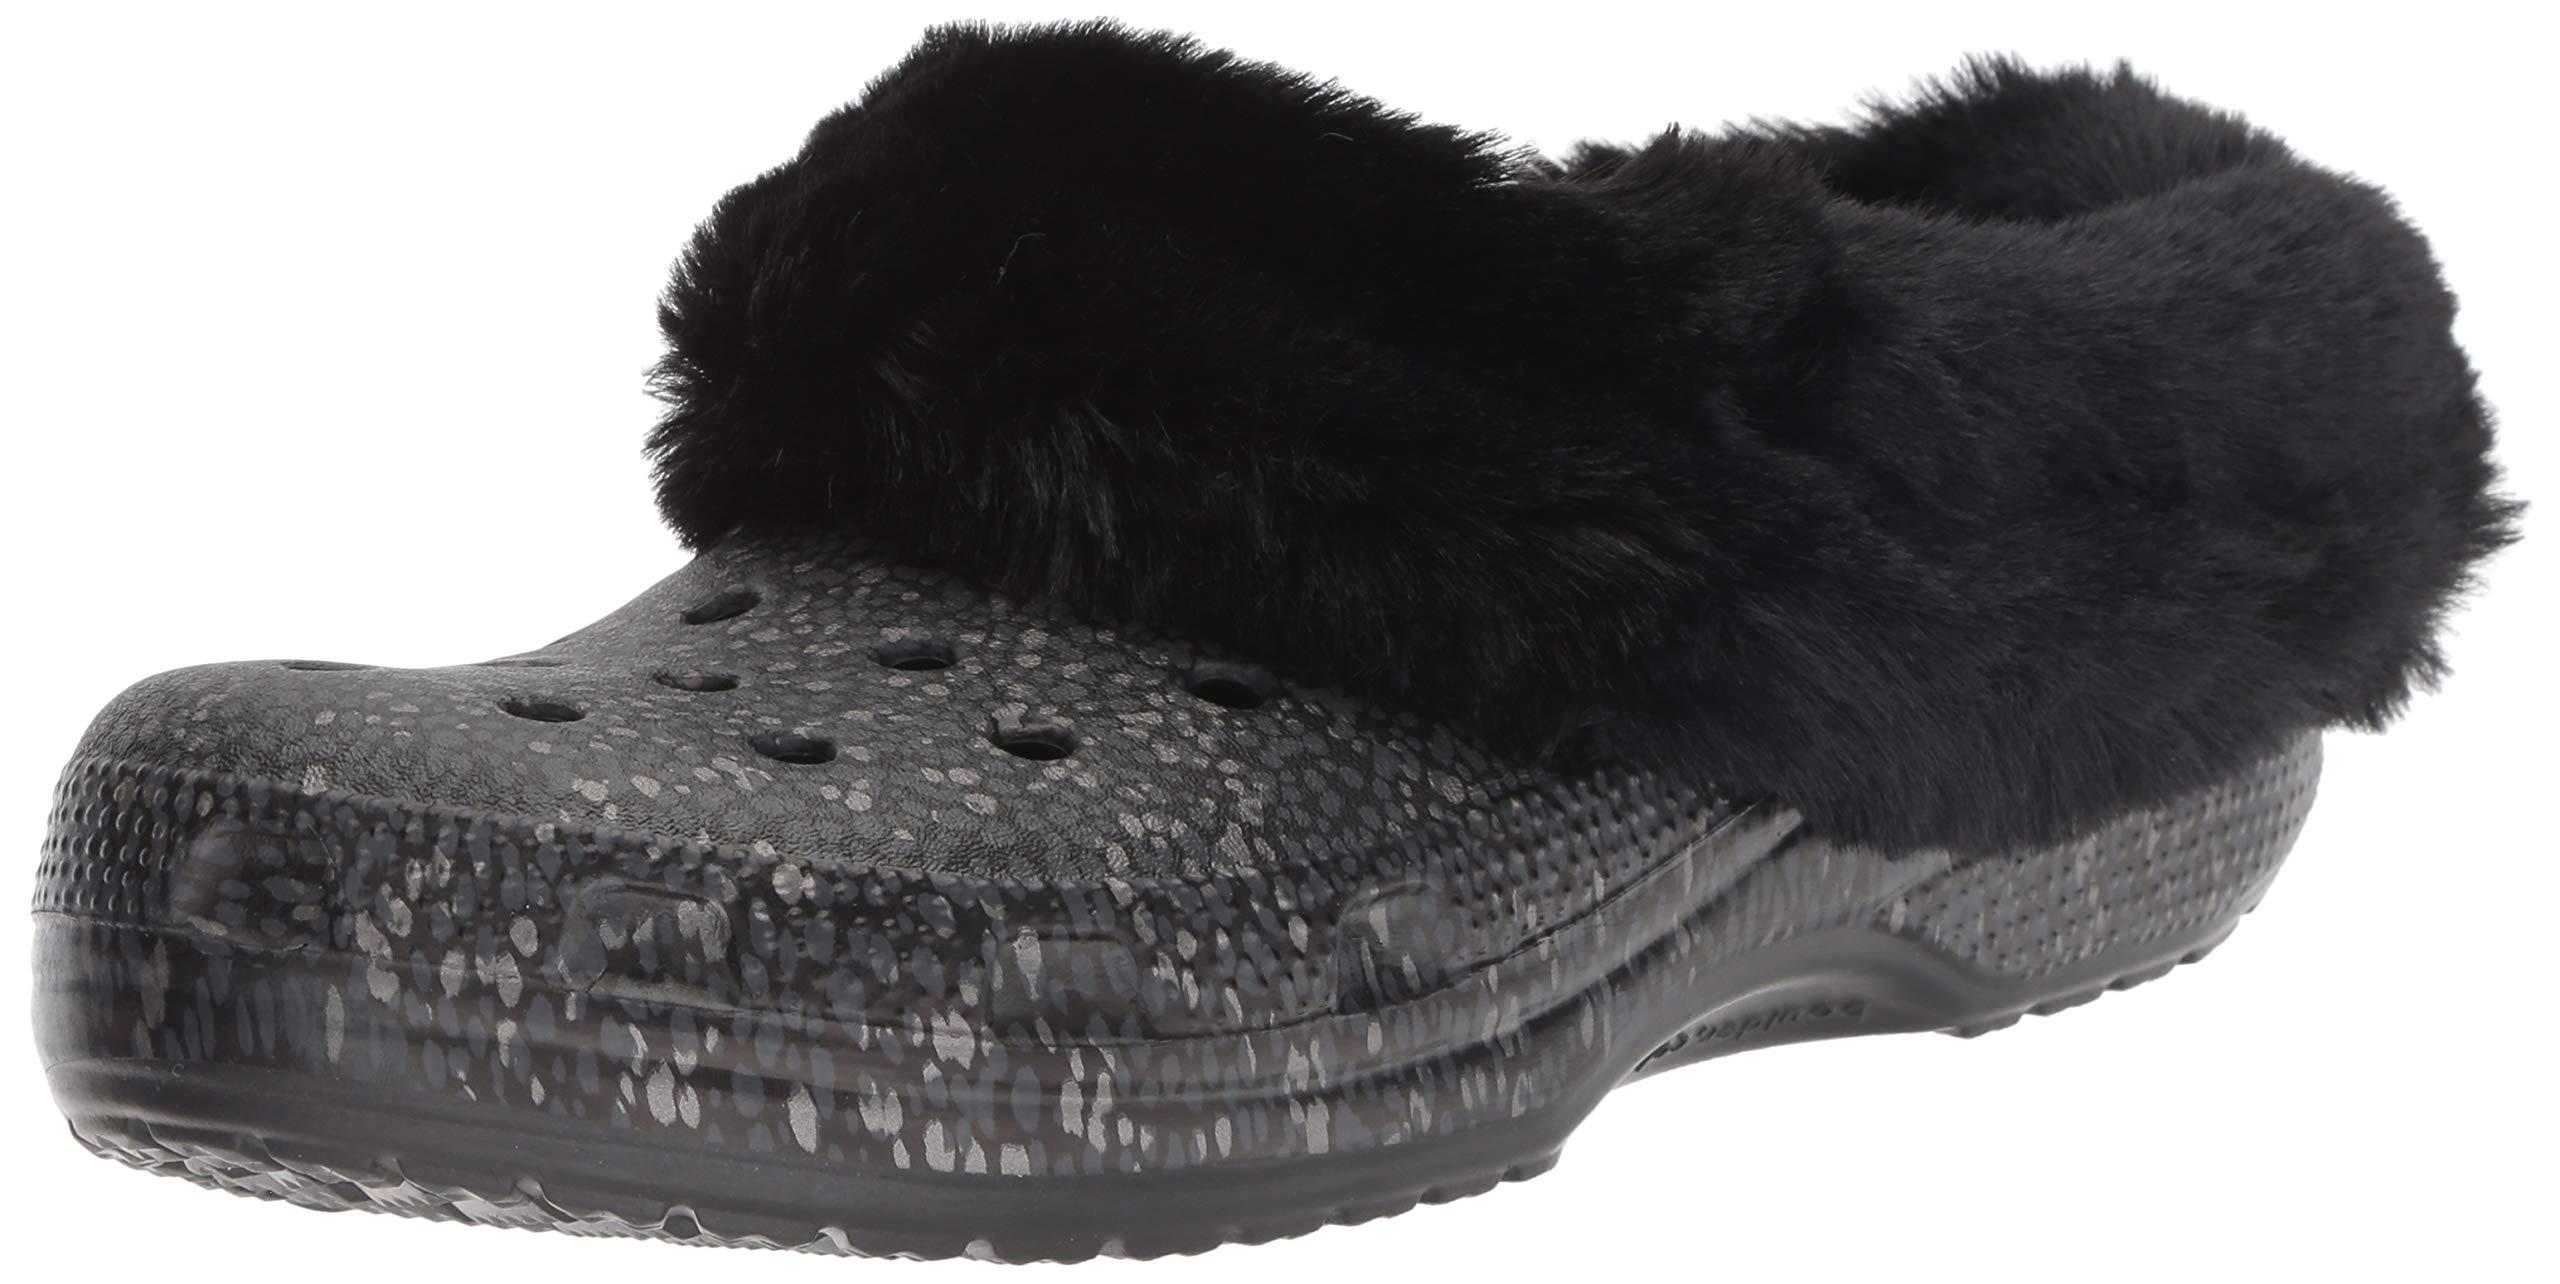 crocs classic mammoth luxe